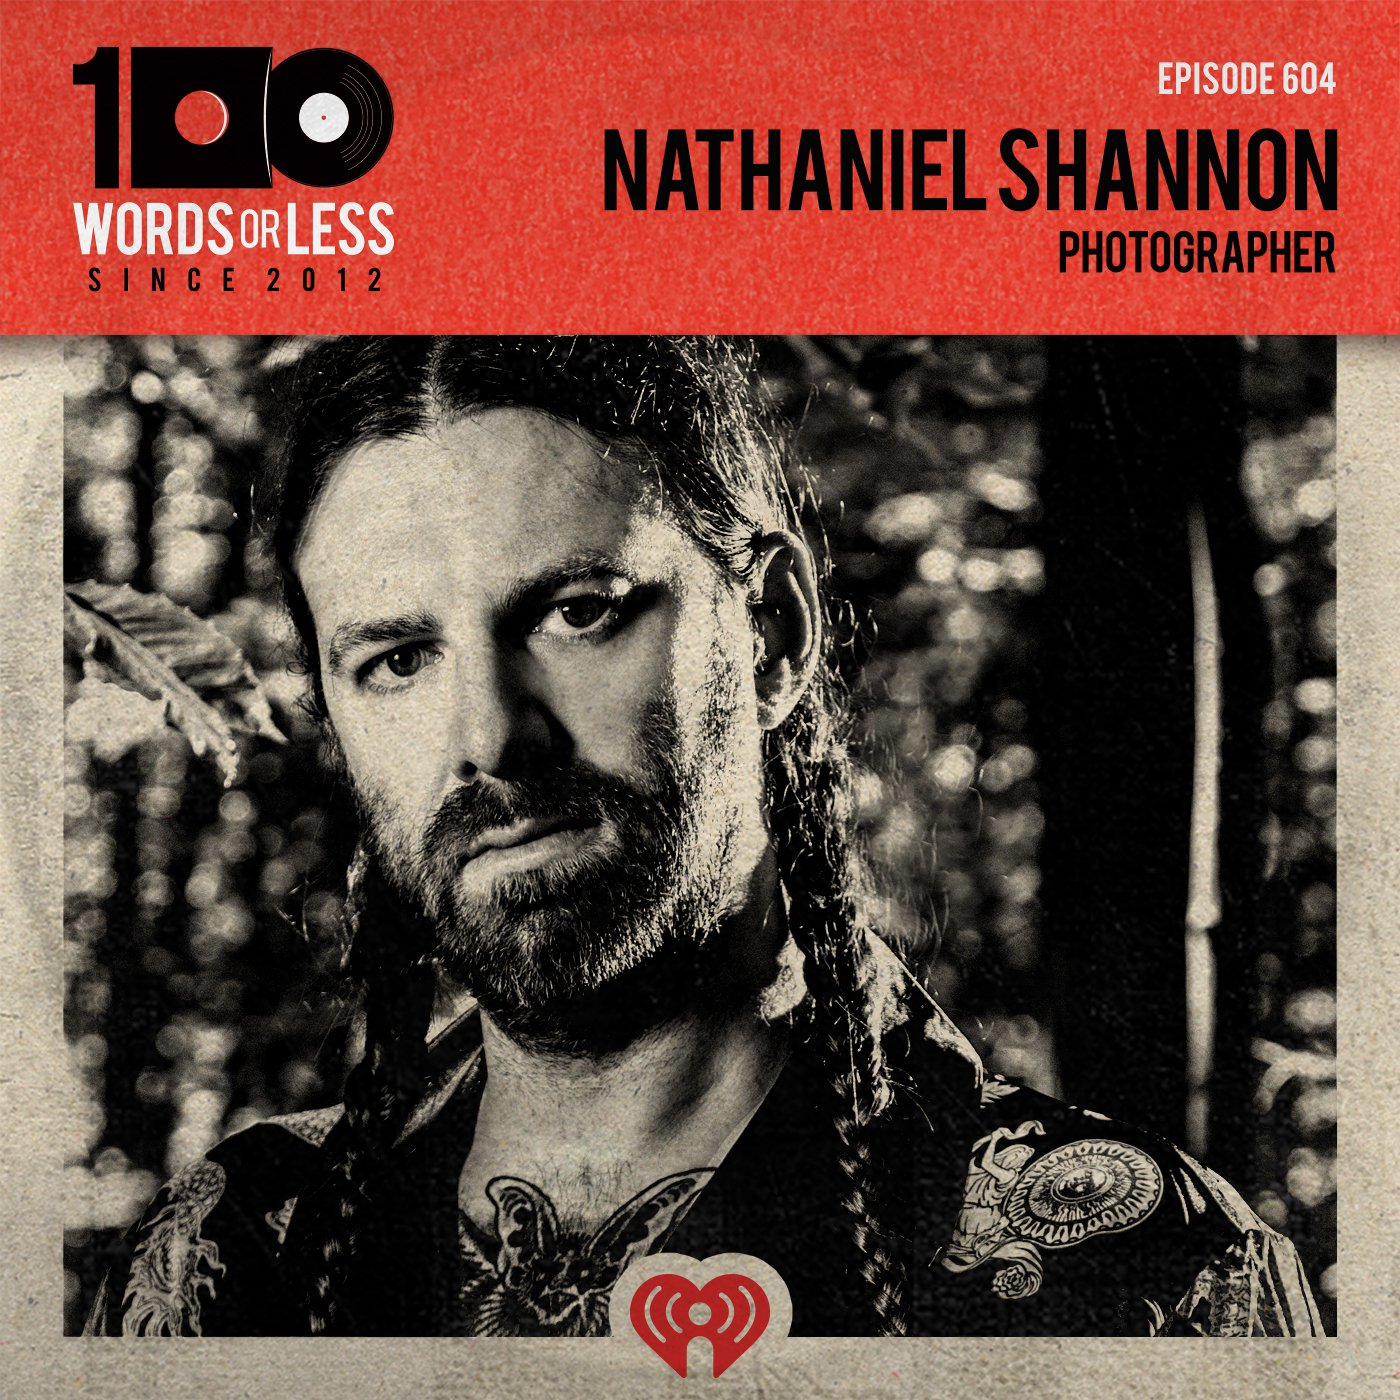 Nathanial Shannon, photographer